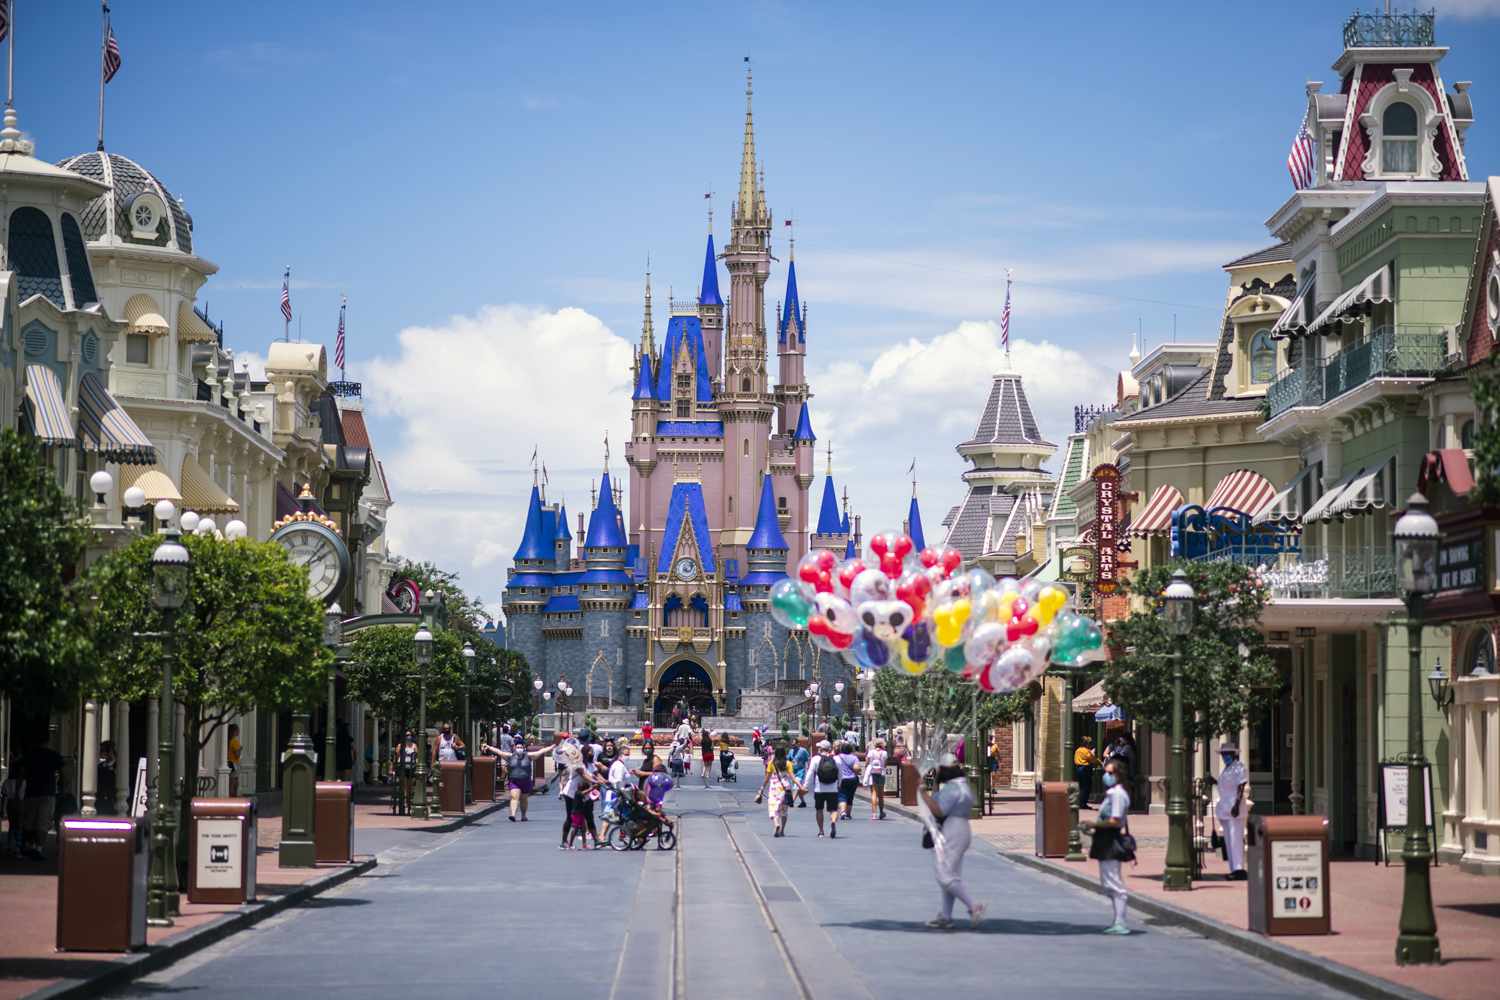 Cinderella Castle and Main Street, U.S.A. are seen at Walt Disney World Resort's Magic Kingdom